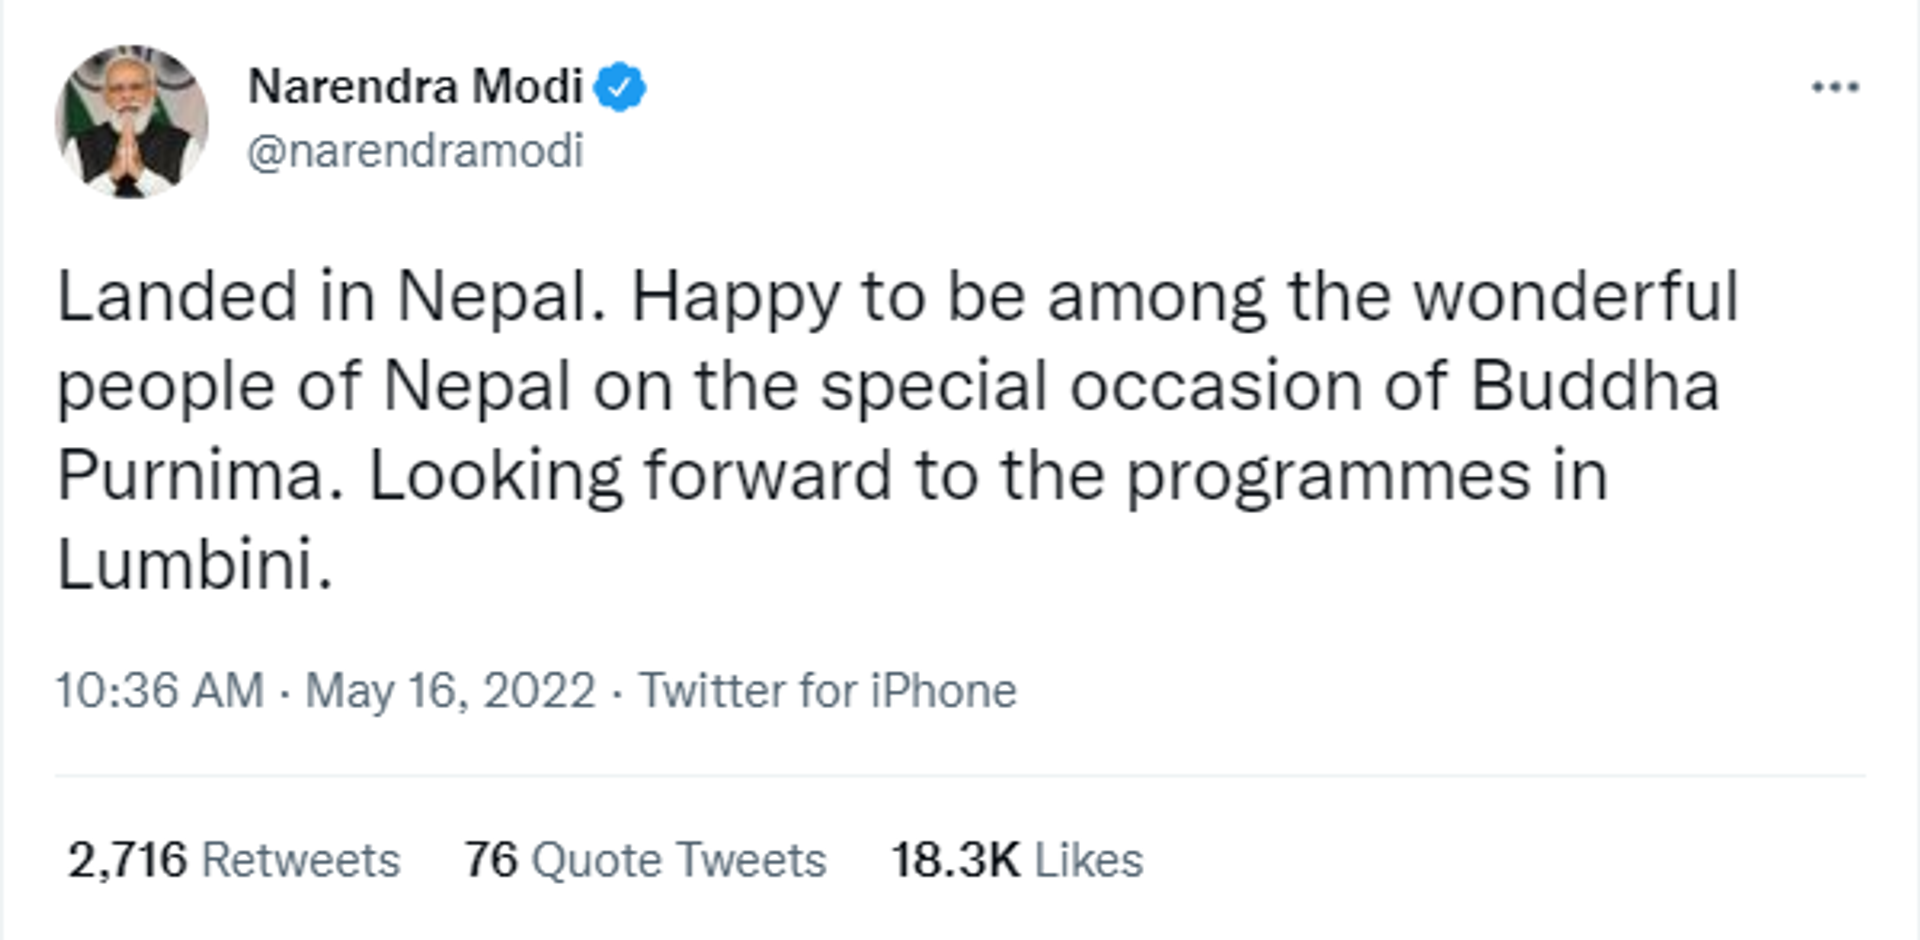 Prime Minister Narendra Modi Expresses Happiness on His Visit to Lumbini in Nepal - Sputnik International, 1920, 16.05.2022